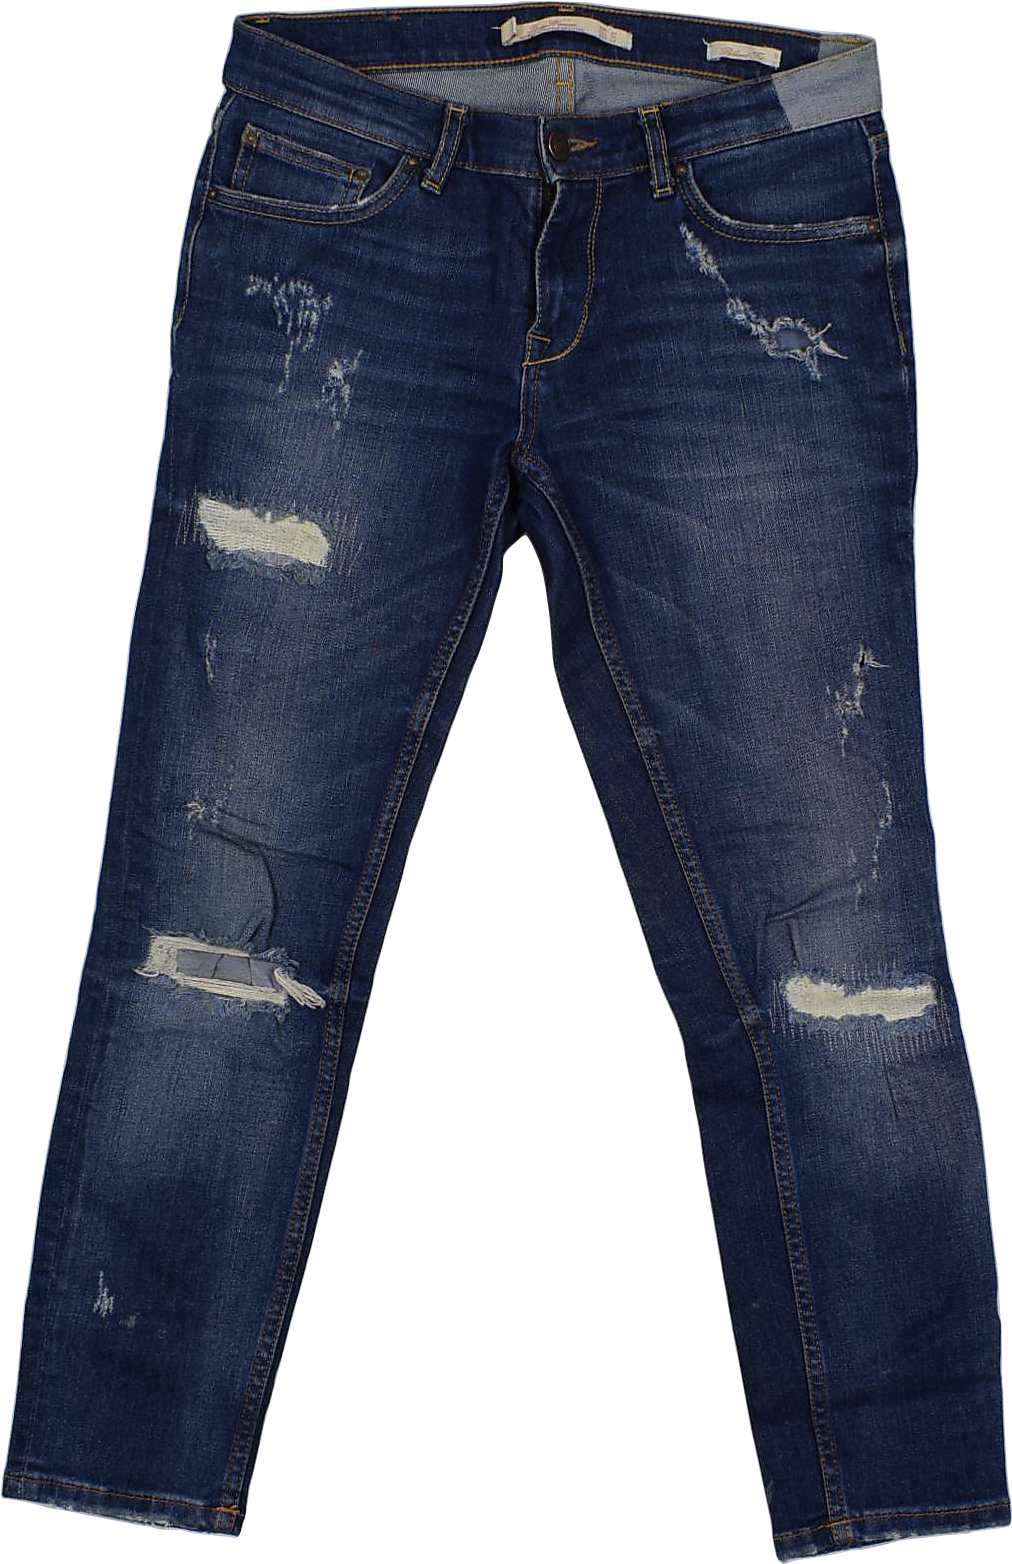 Distressed Blue Denim Jeans PNG